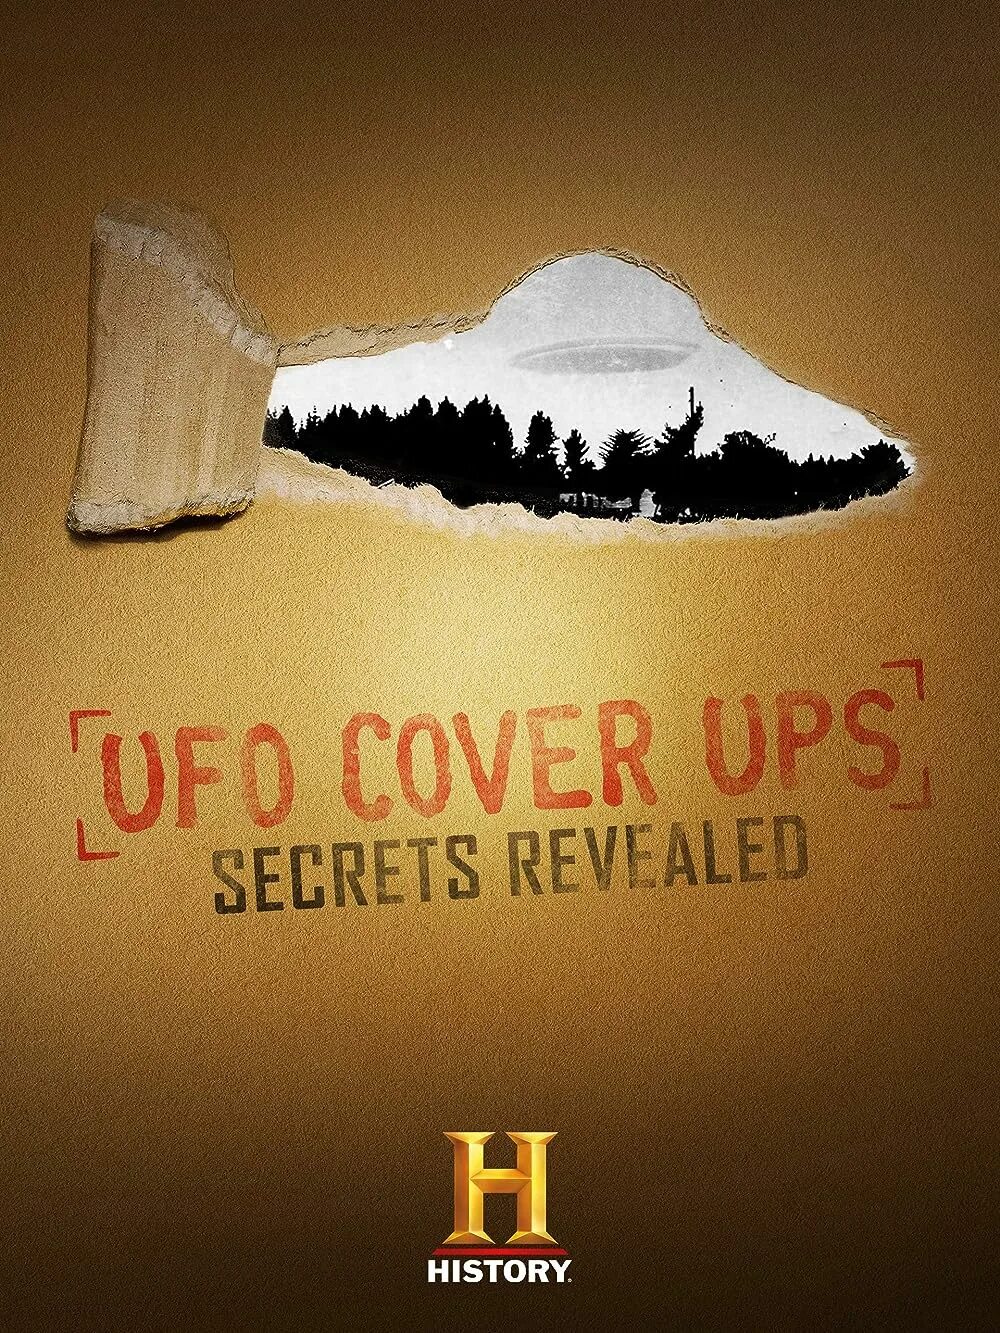 Reveal secrets. UFO Cover. Cover ups.